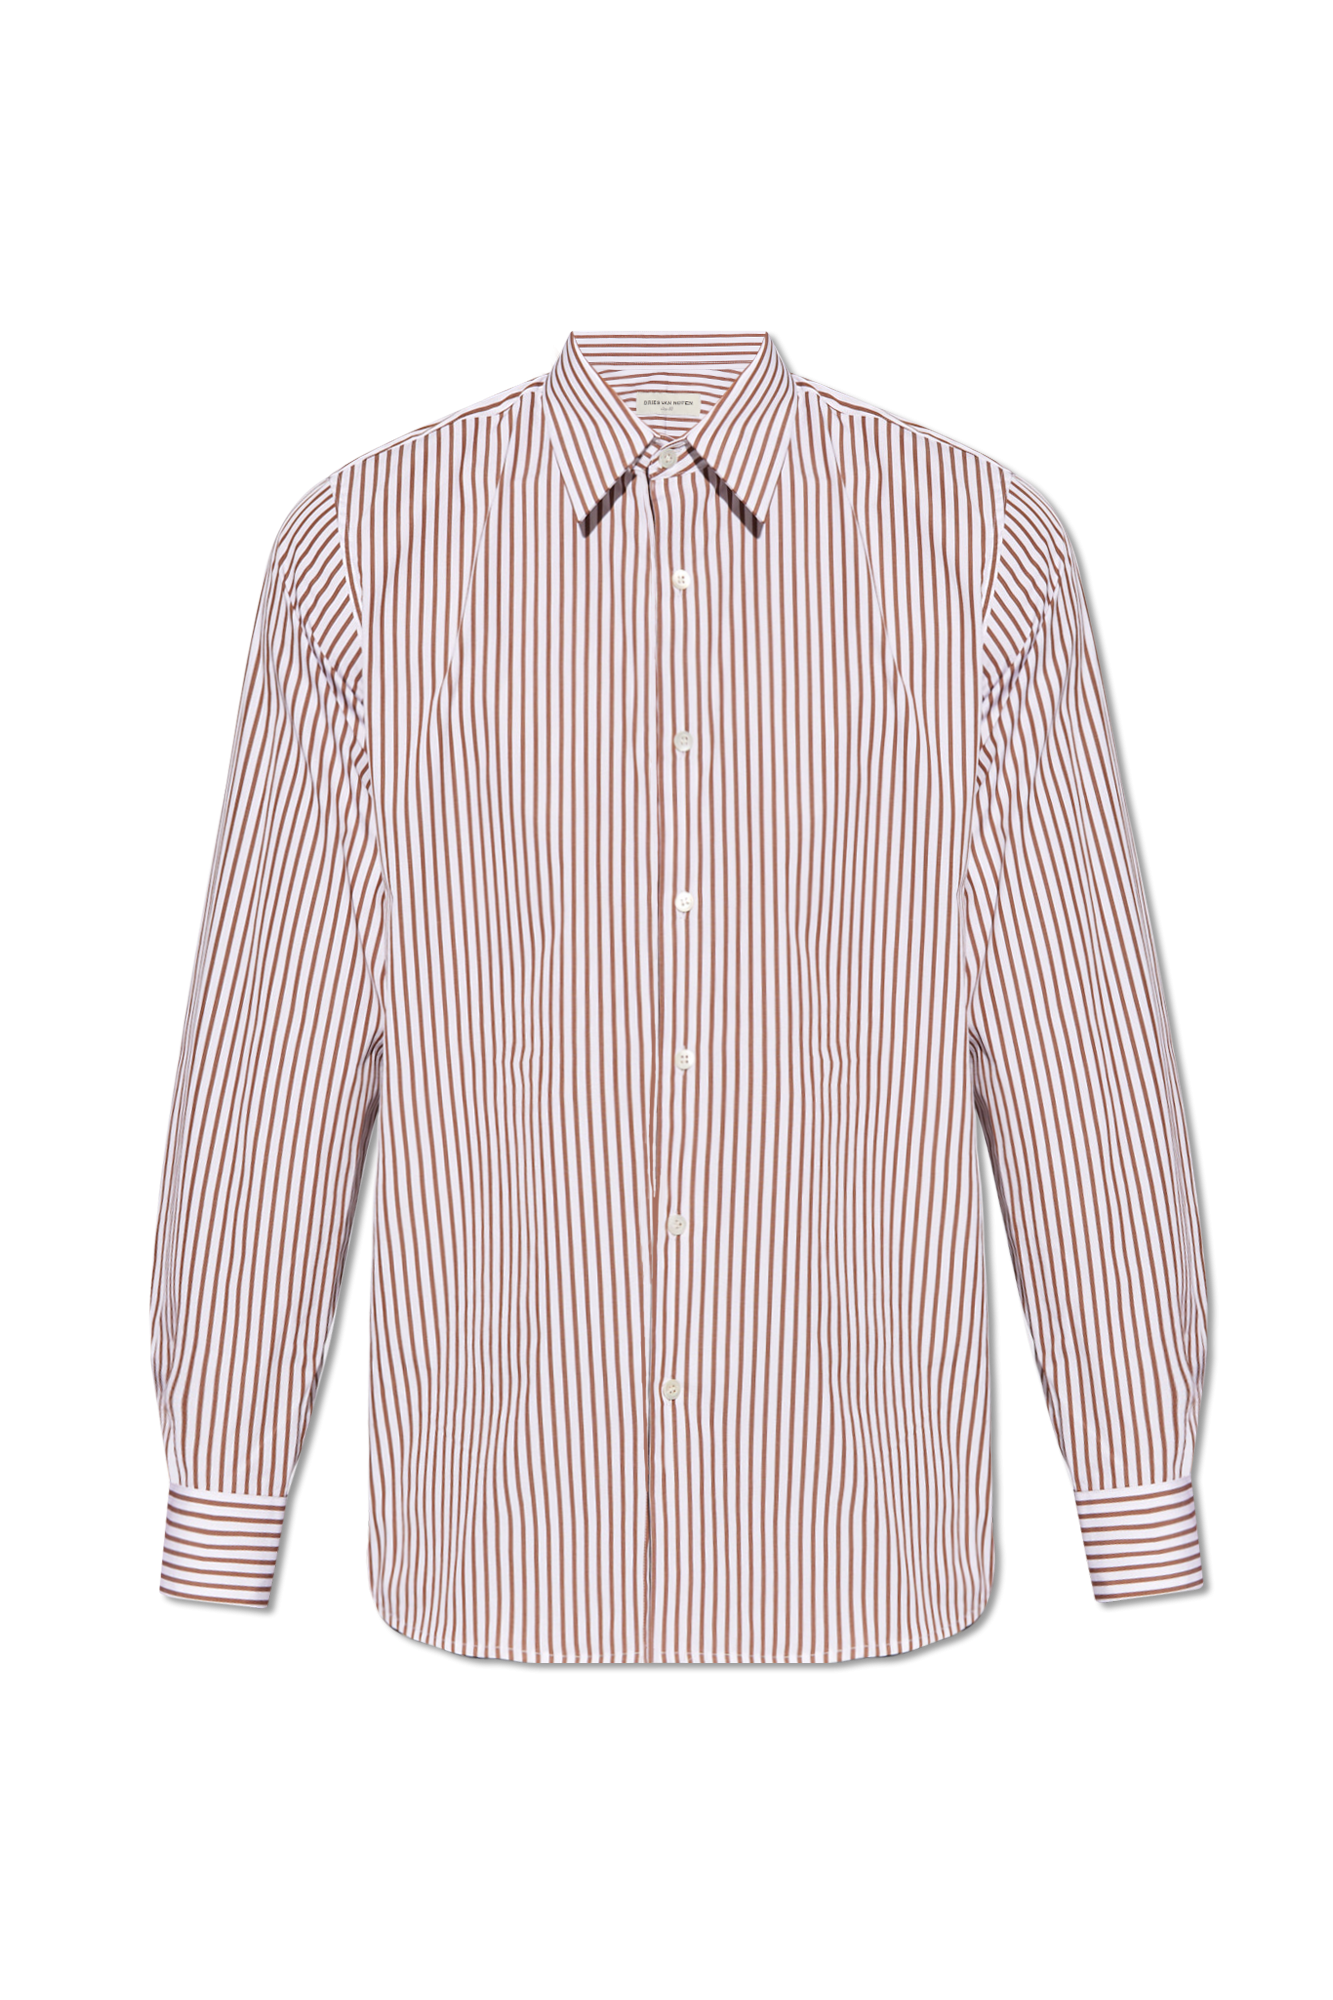 Rick up sweater - Brown Striped shirt Dries Van Noten